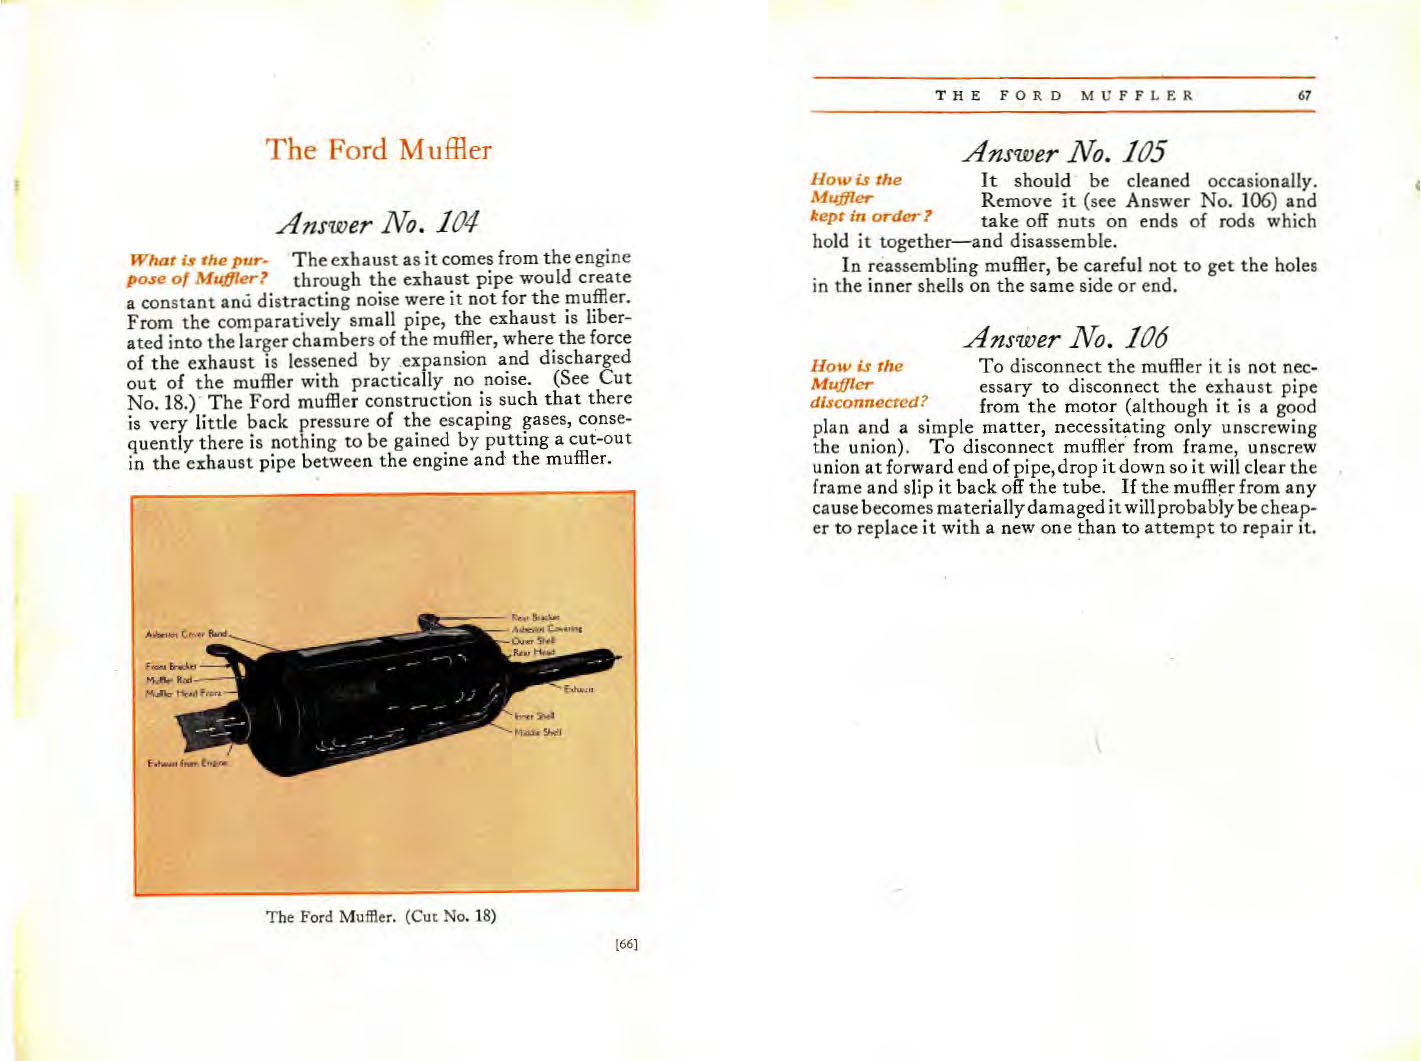 n_1915 Ford Owners Manual-66-67.jpg